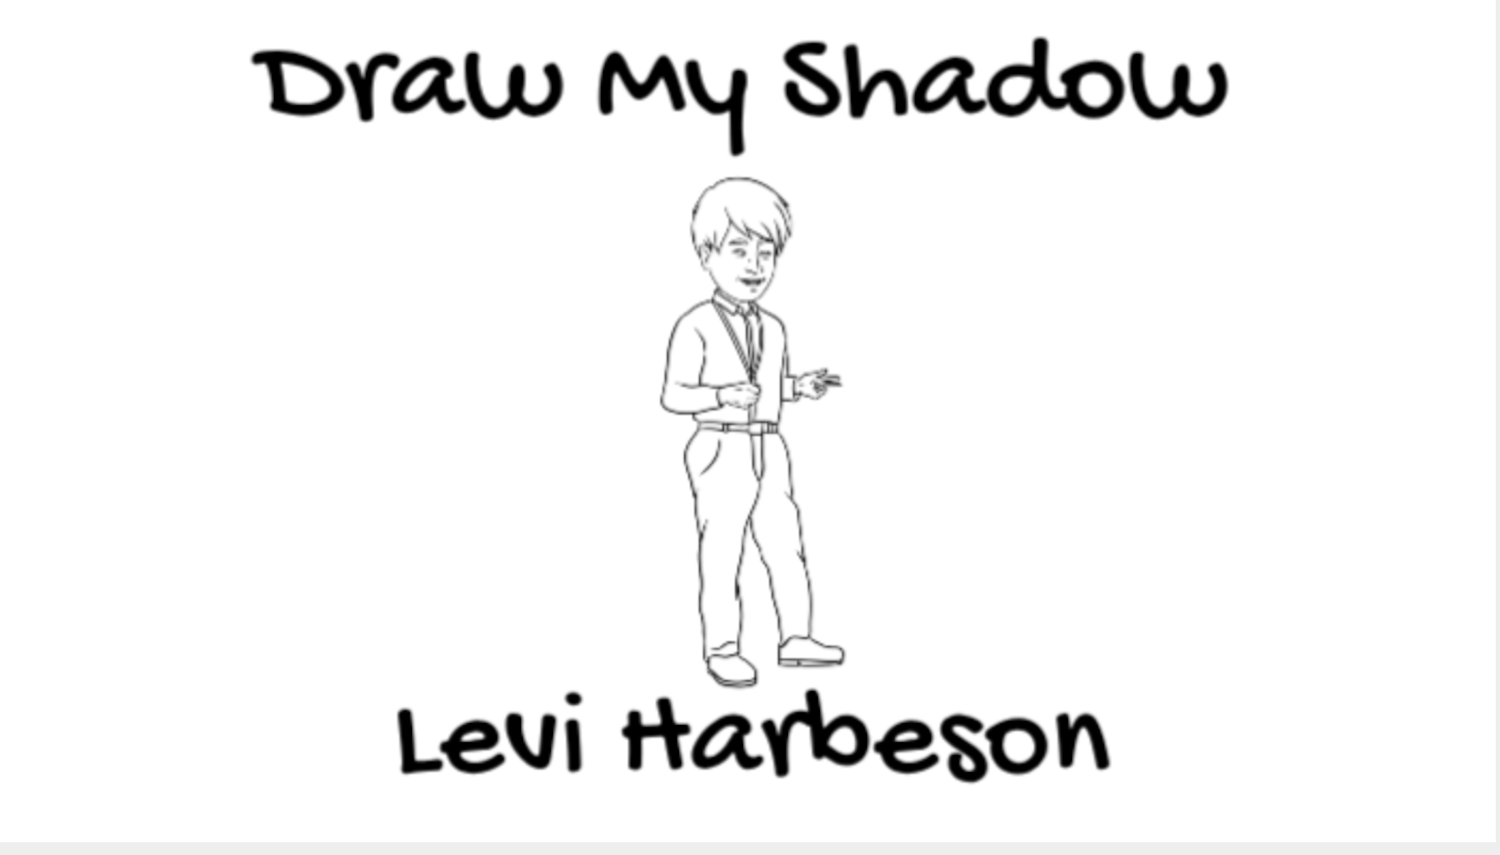 DRAW MY SHADOW: Mr. Harbeson